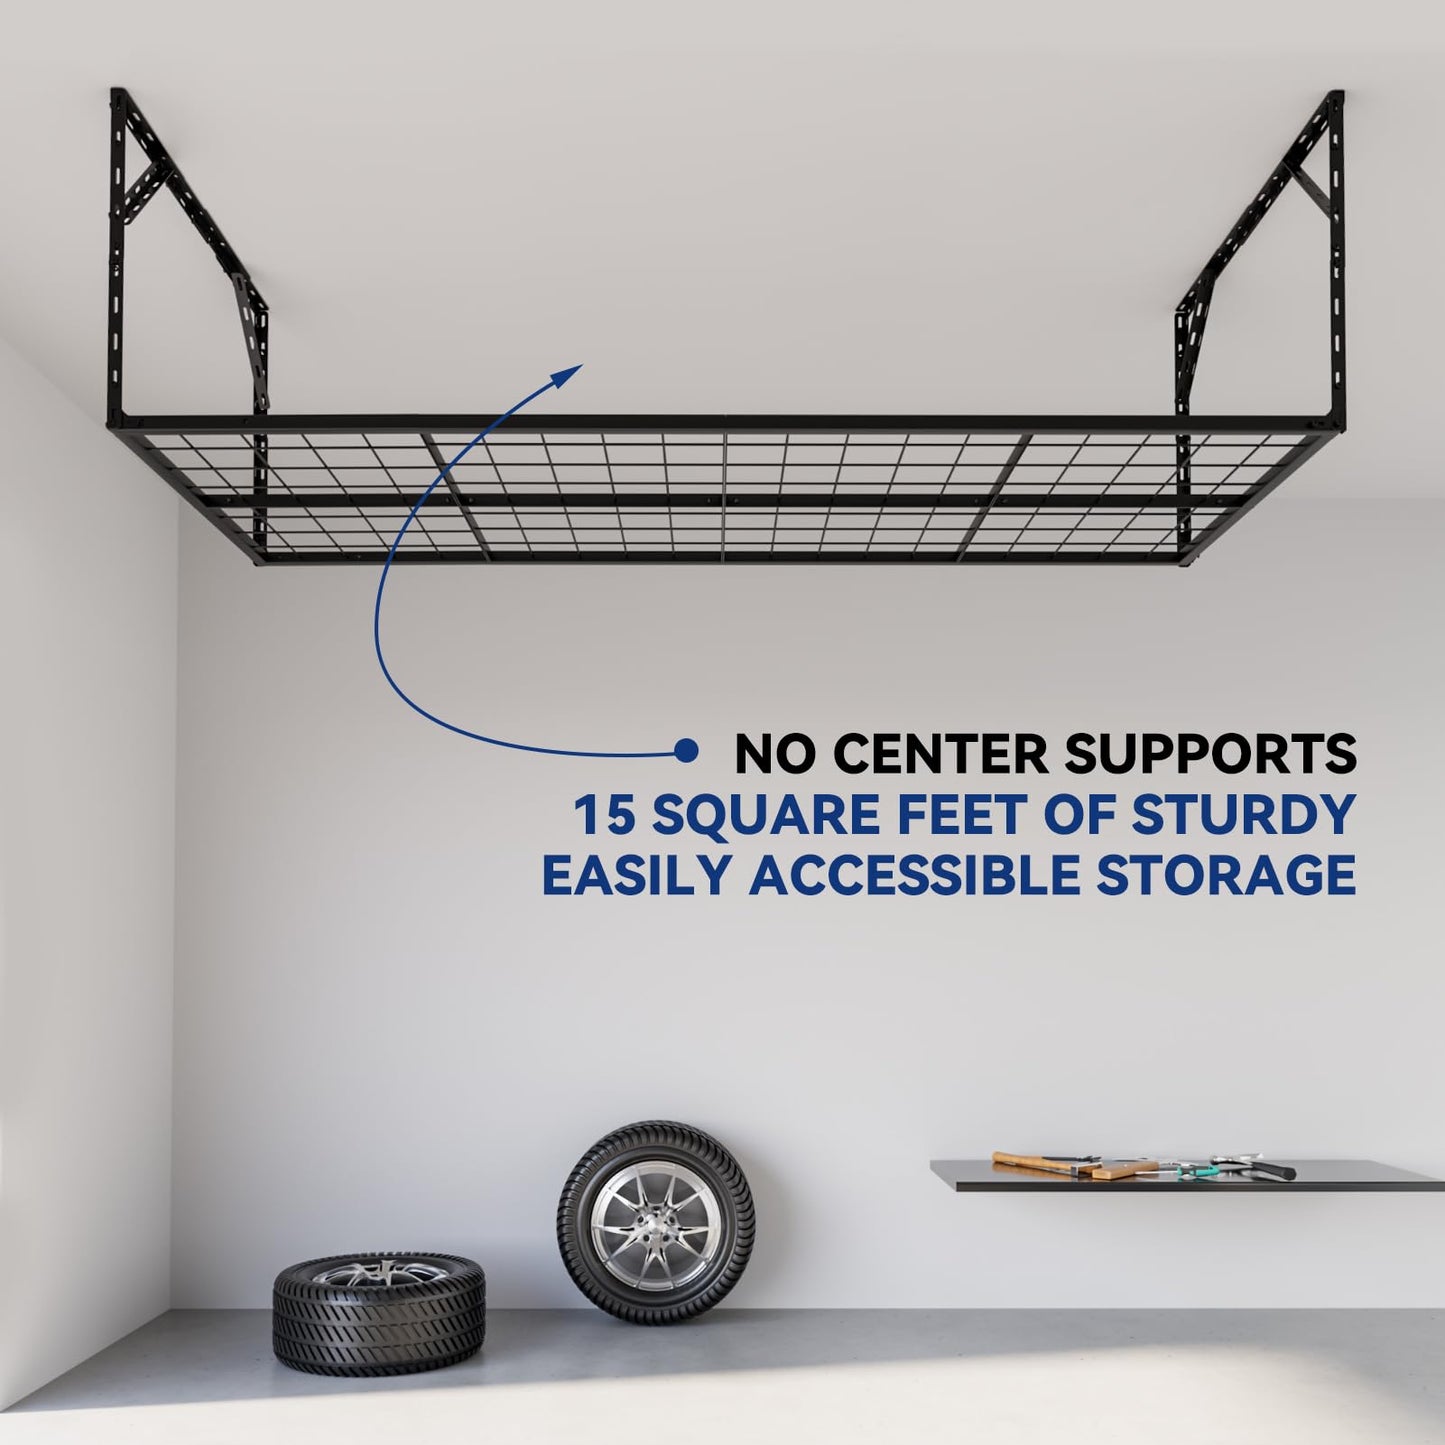 DNIWTSAE 2x5.5 Overhead Garage Storage Adjustable Ceiling Storage Rack, 66 Length x 24" Width x 12-40" Height, 200 Lbs Load Floating Shelves,